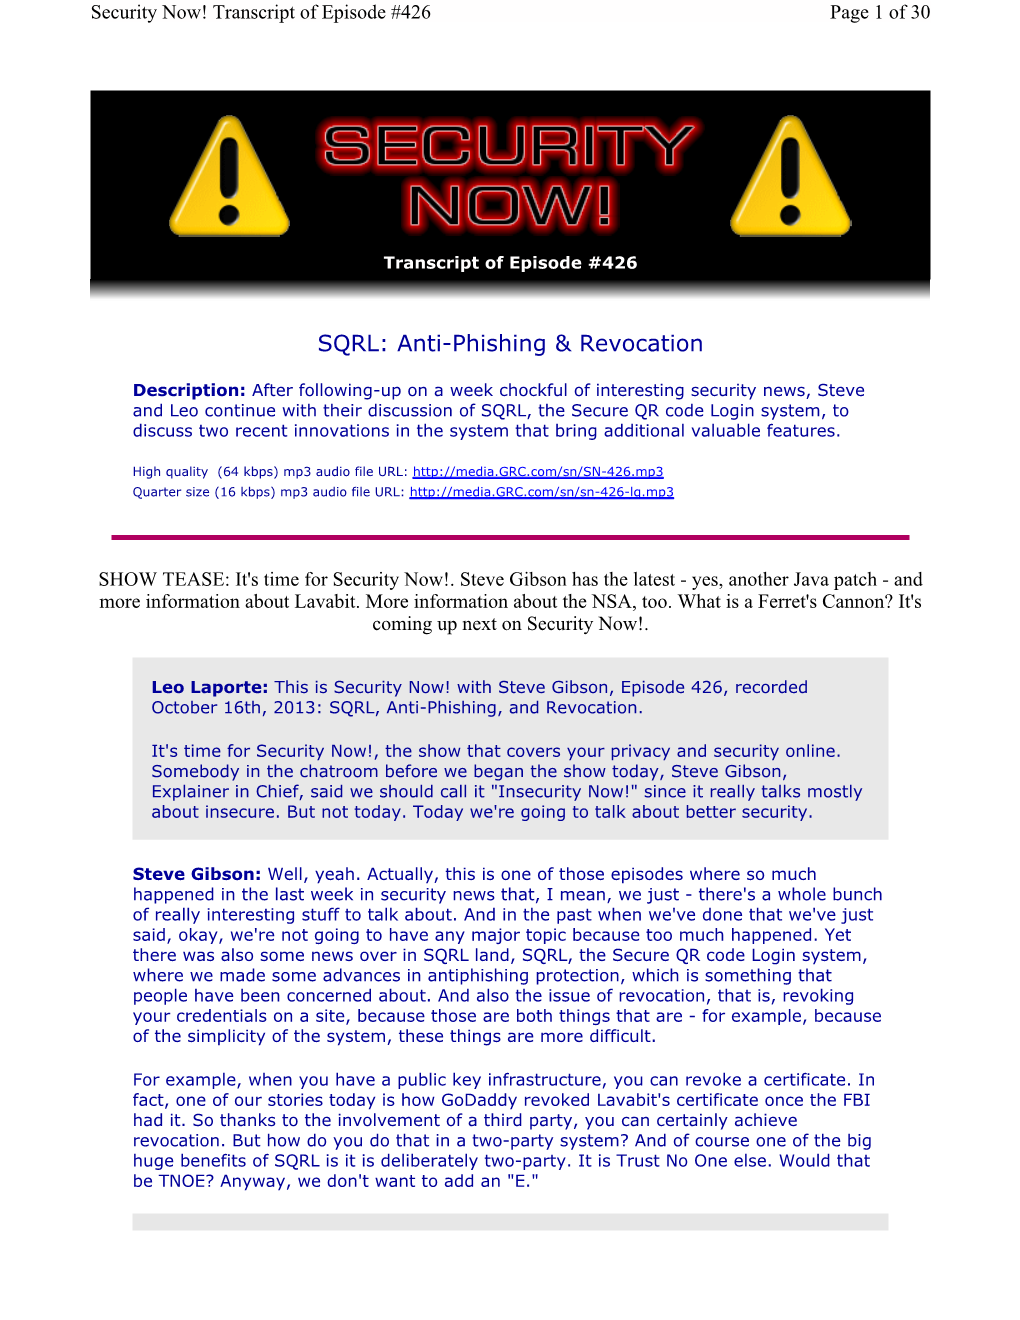 SQRL: Anti-Phishing & Revocation